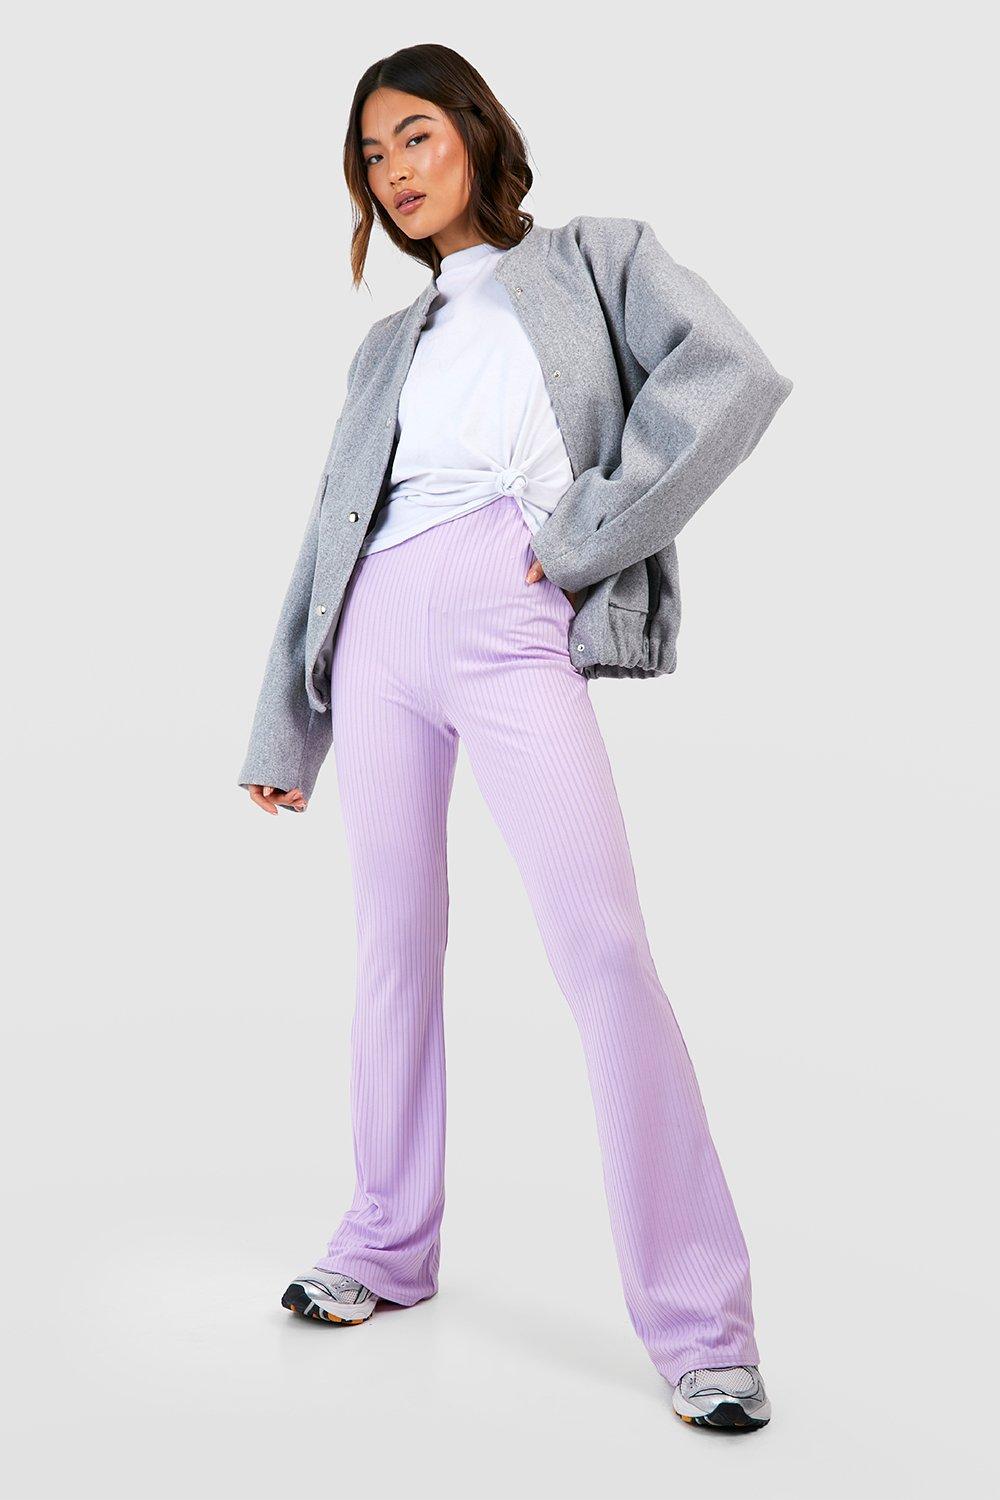 Buy Light Purple Suit Sets for Women by Femea Online | Ajio.com